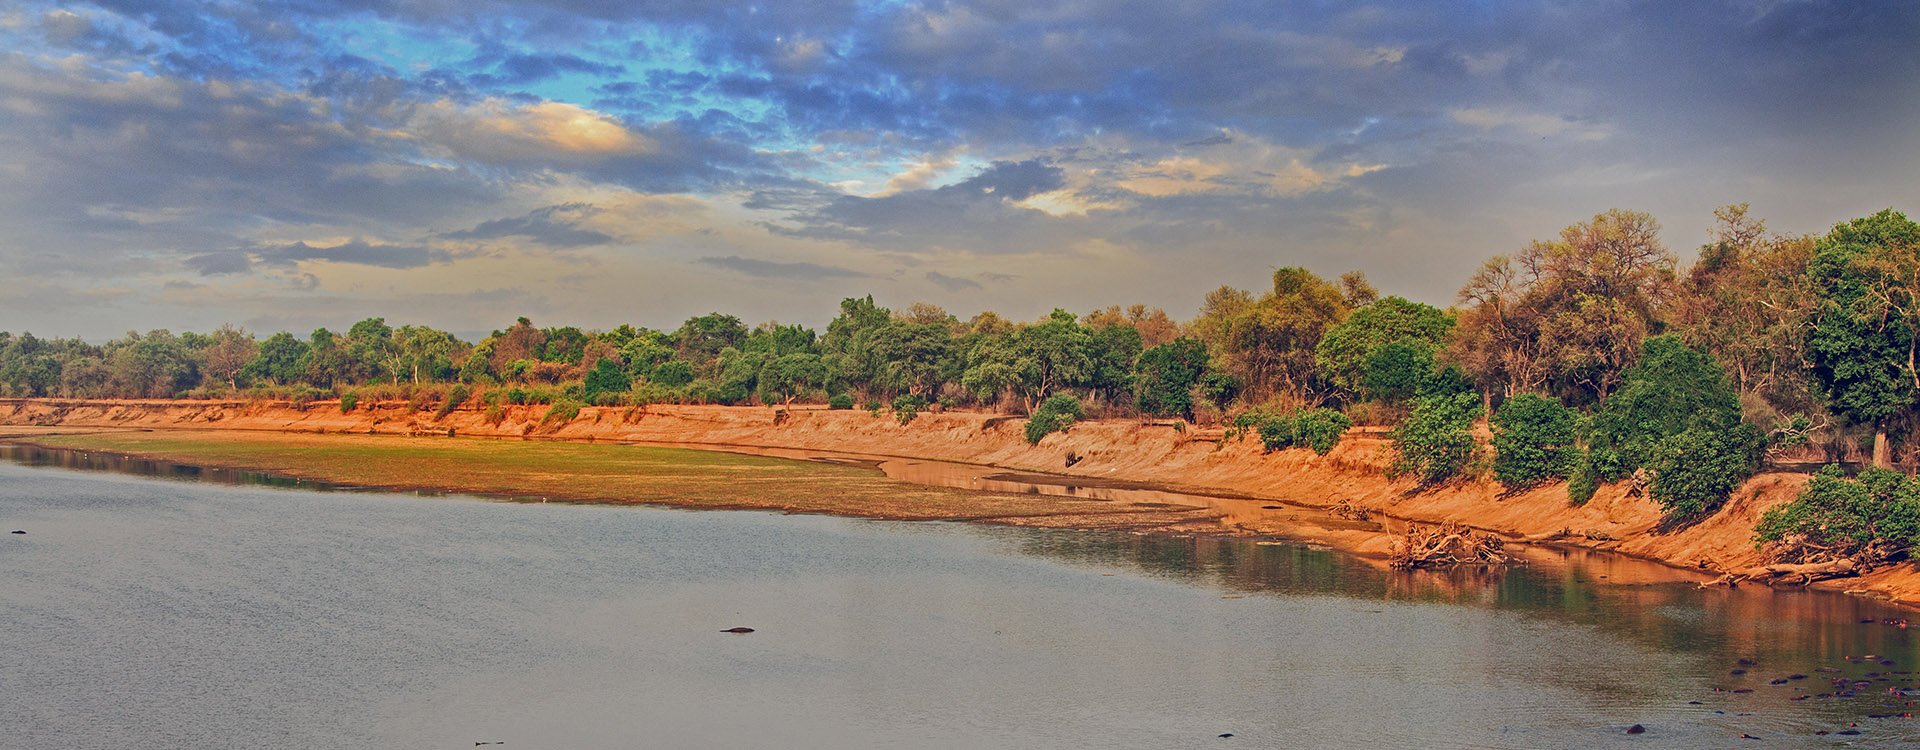 Zambia_Luangwa  NP_Luangwa  River